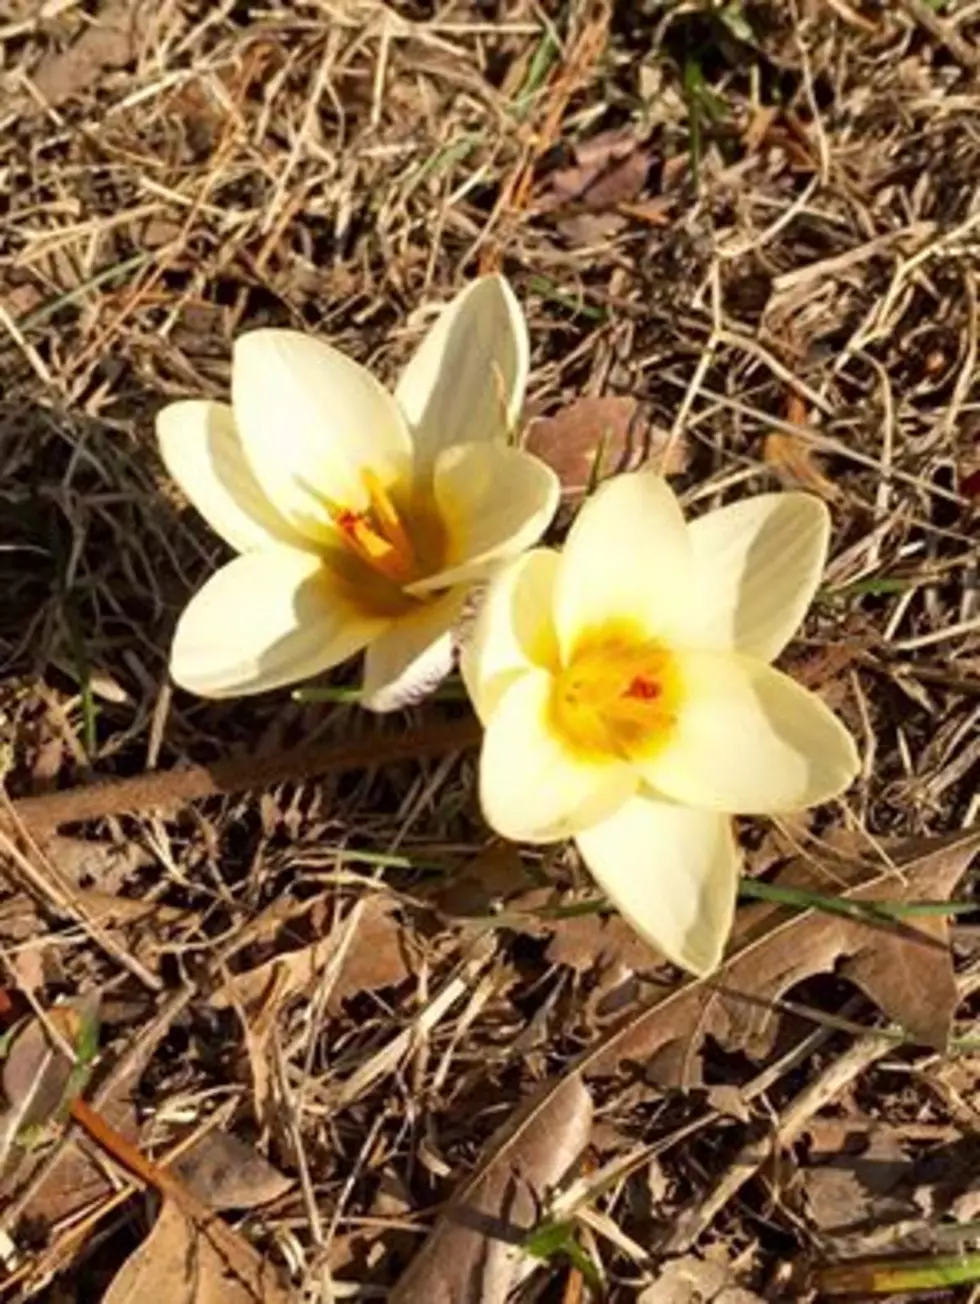 Signs Of Spring In Ocean County